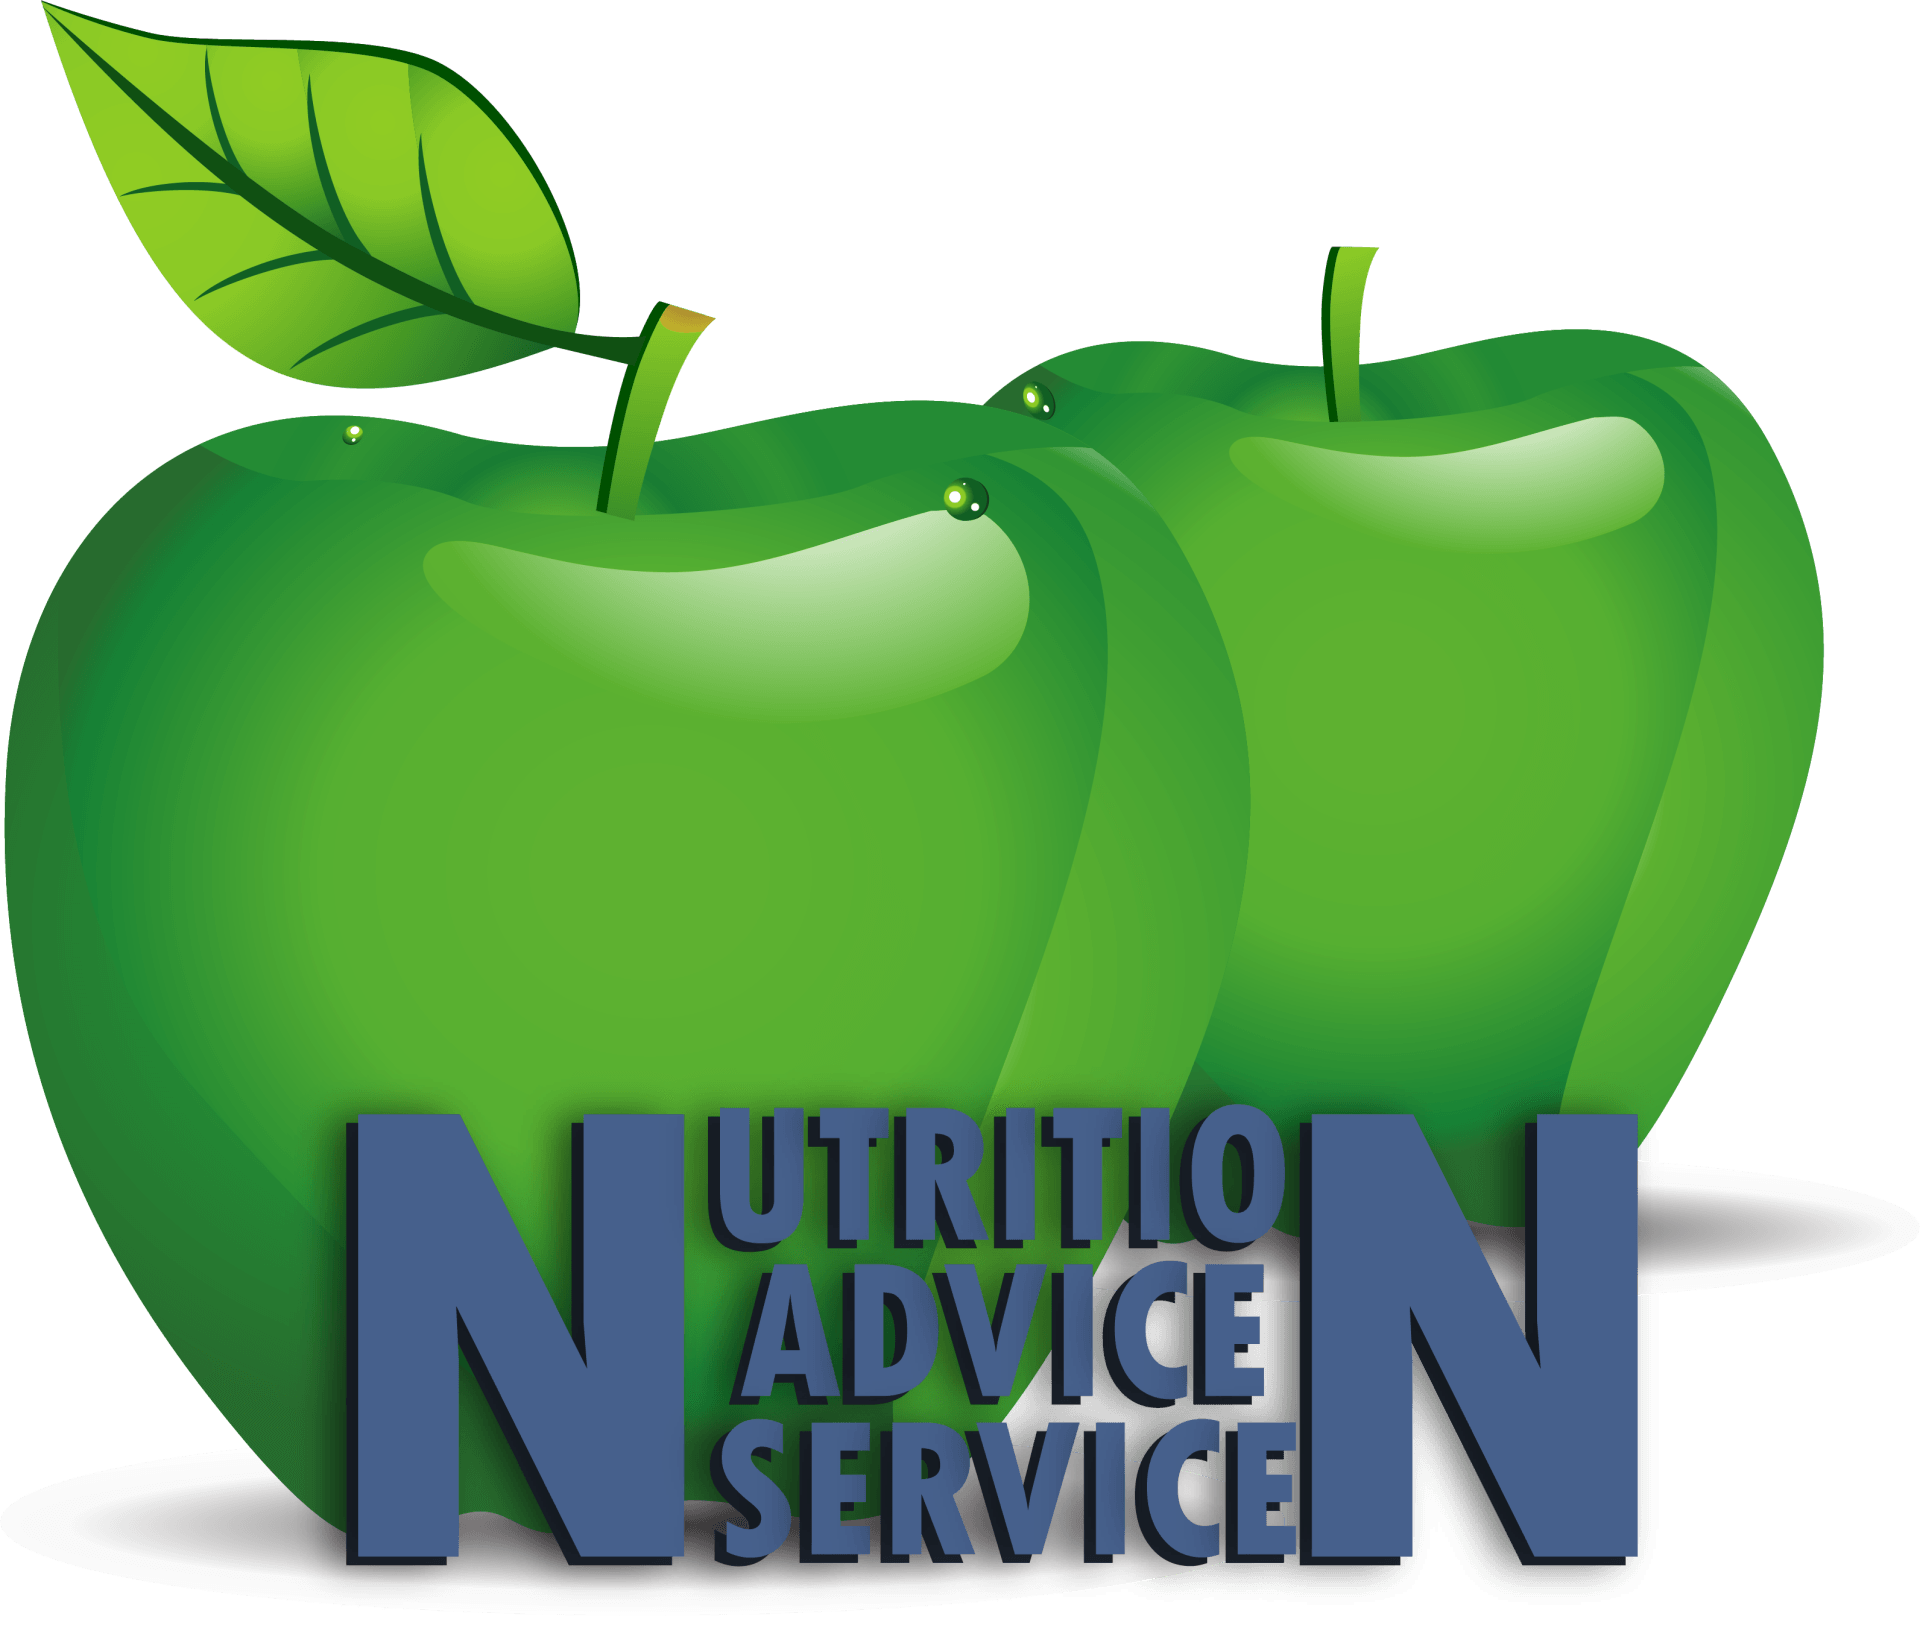 Nutrition Advice Service